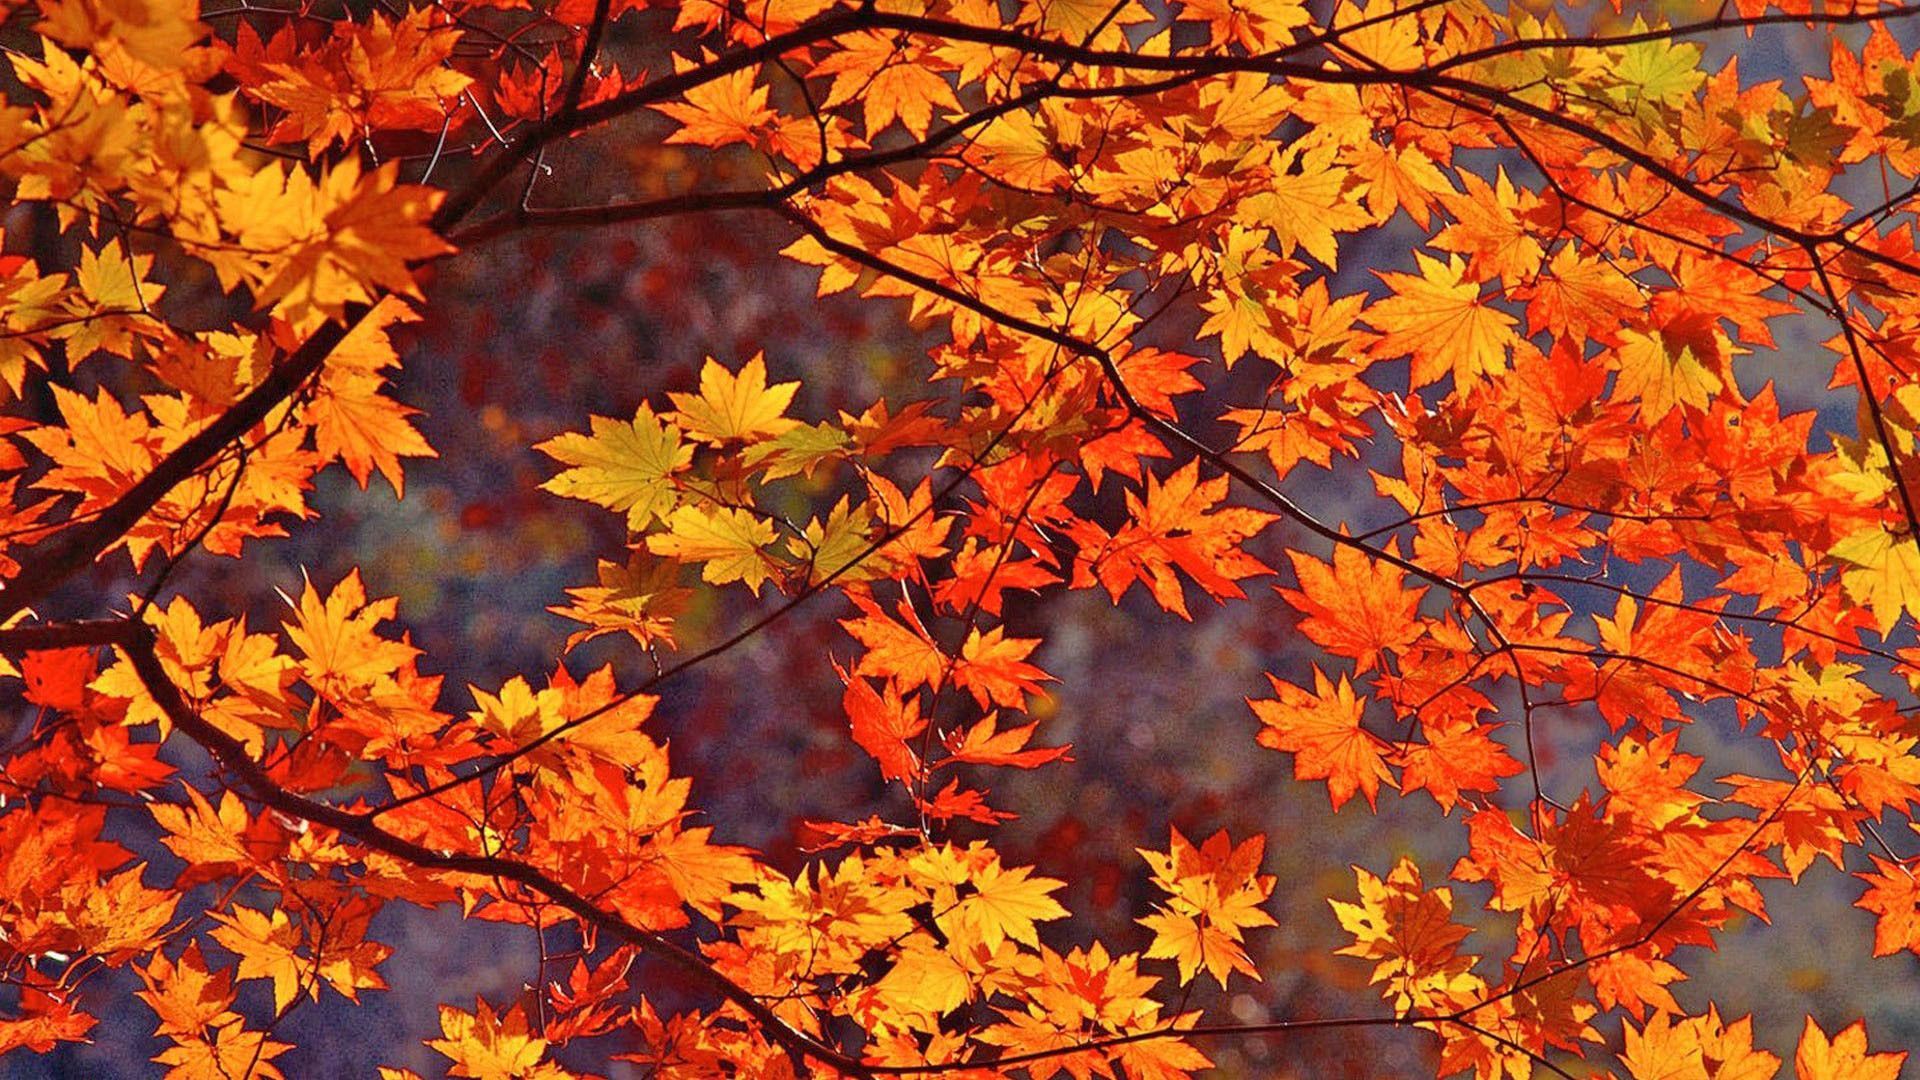 Autumn Leaves Desktop Wallpaper. 1920x1080. Free fall wallpaper, Autumn leaves wallpaper, Fall wallpaper